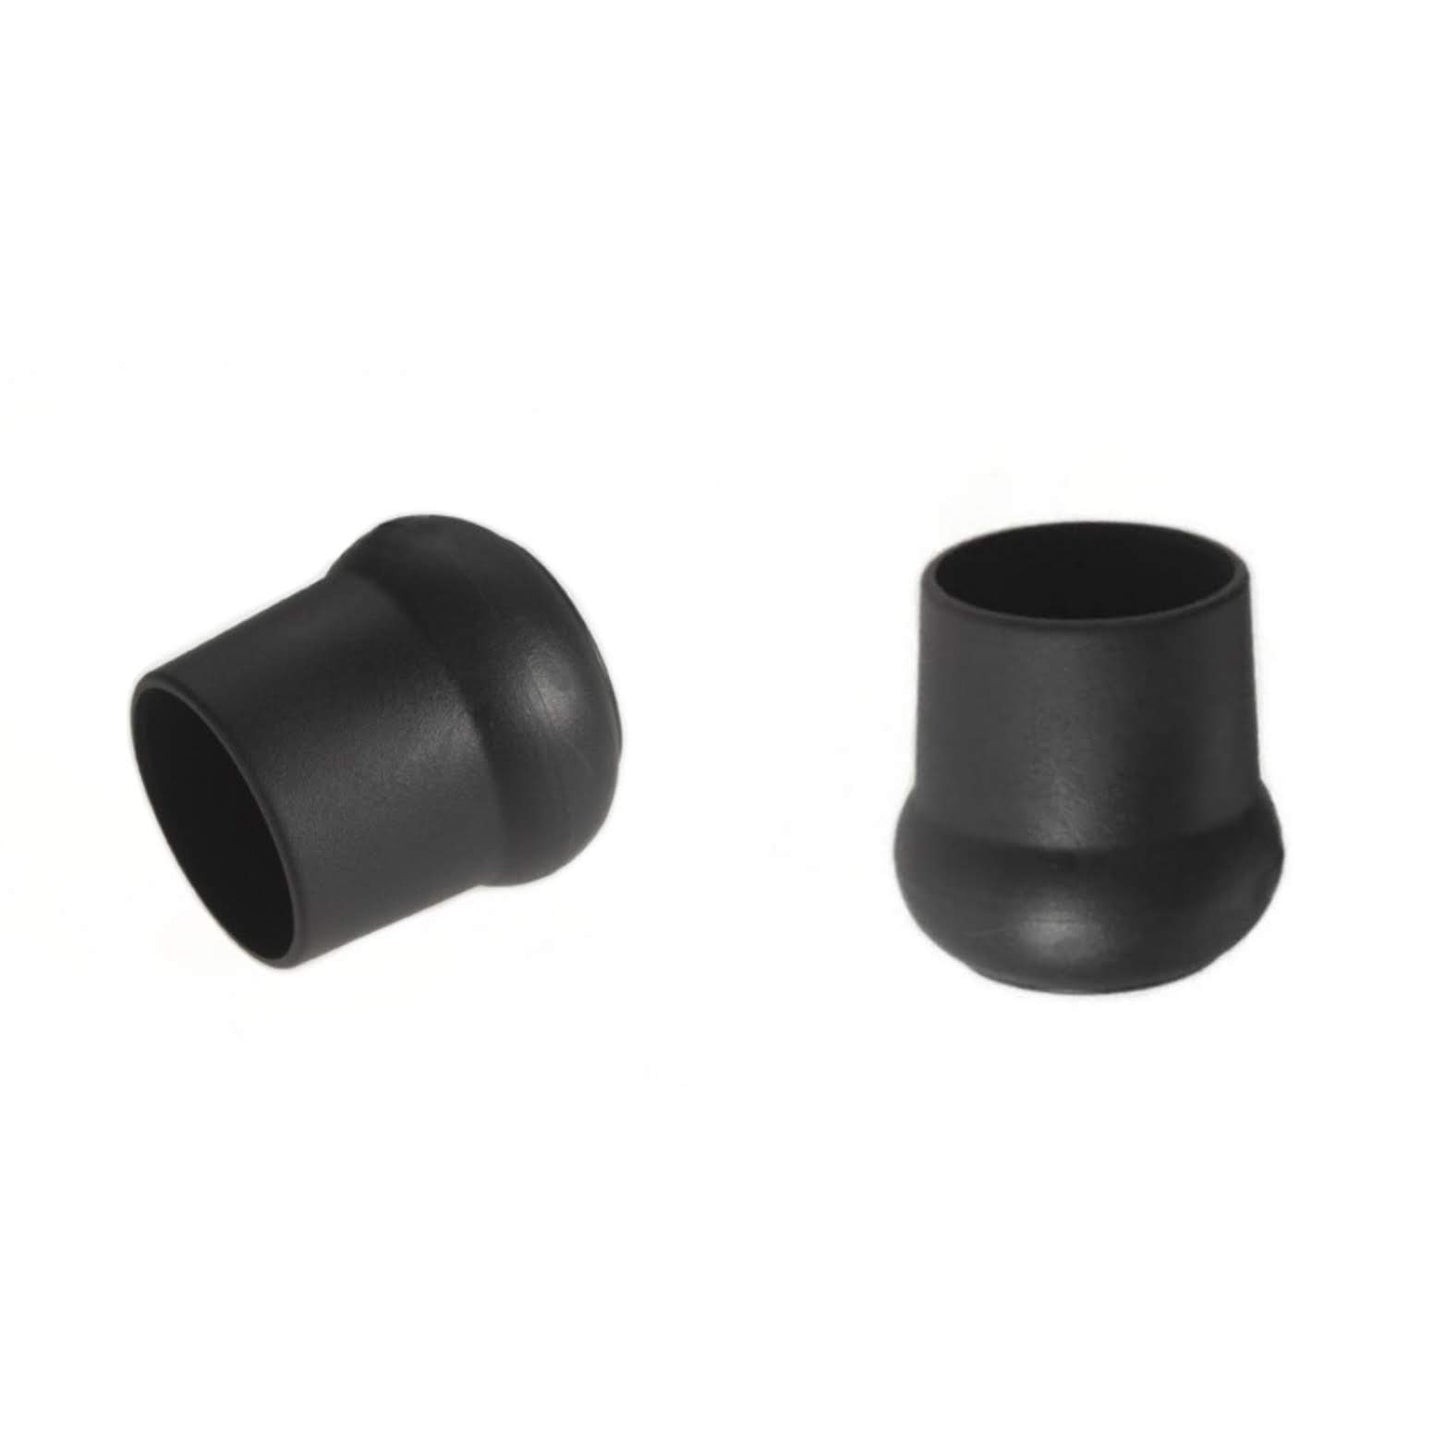 Heavy Duty Rubber Ferrules - Non-Slip End Caps | Keay Vital Parts